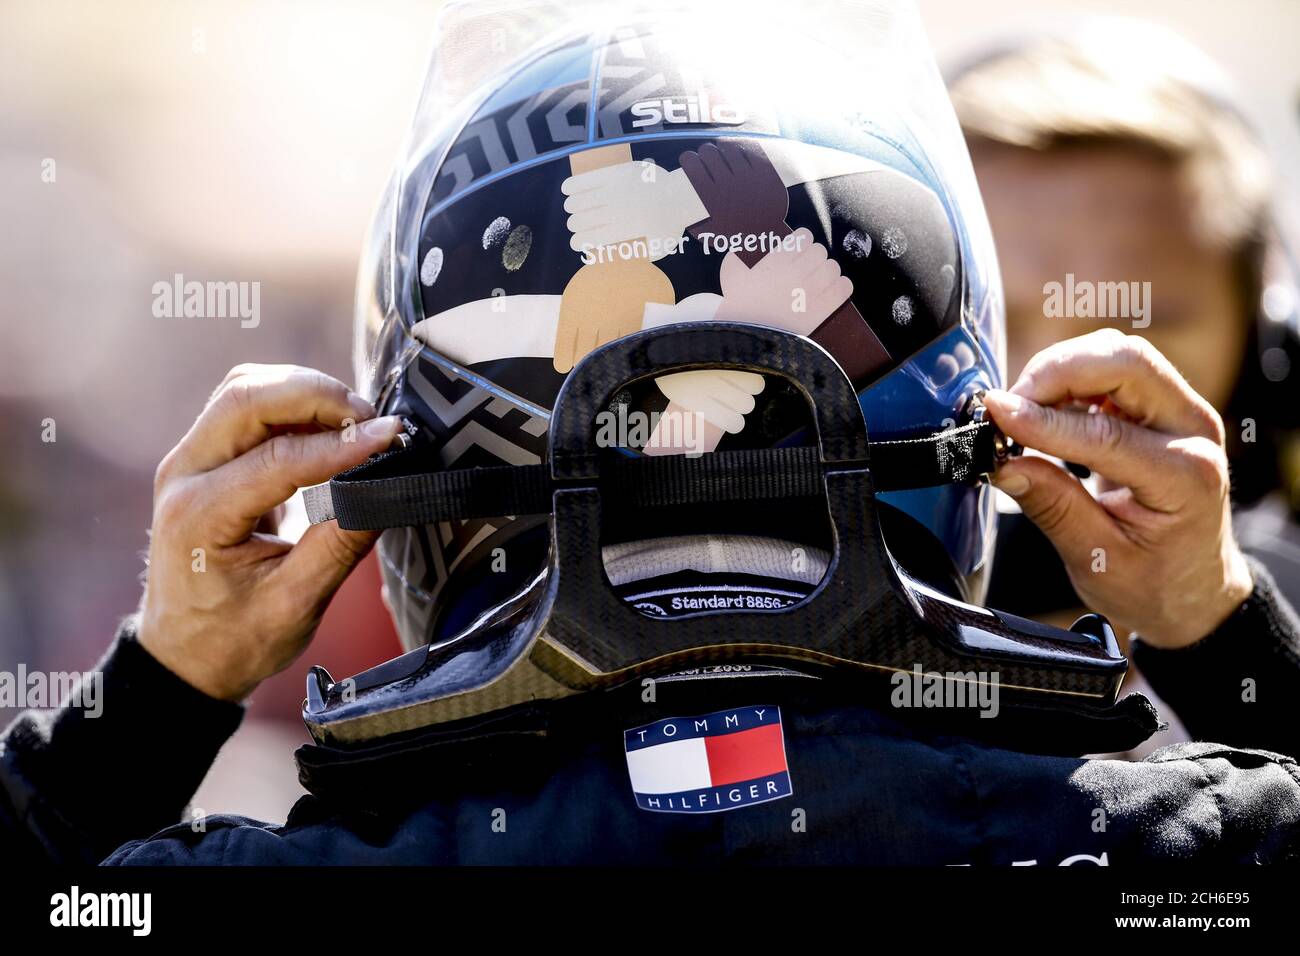 BOTTAS Valtteri (fin), Mercedes AMG F1 GP W11 Hybrid EQ Power+, portrait  helmet, casque, during the Formula 1 Pirelli Gran Premio Della Toscana  Ferrar Stock Photo - Alamy